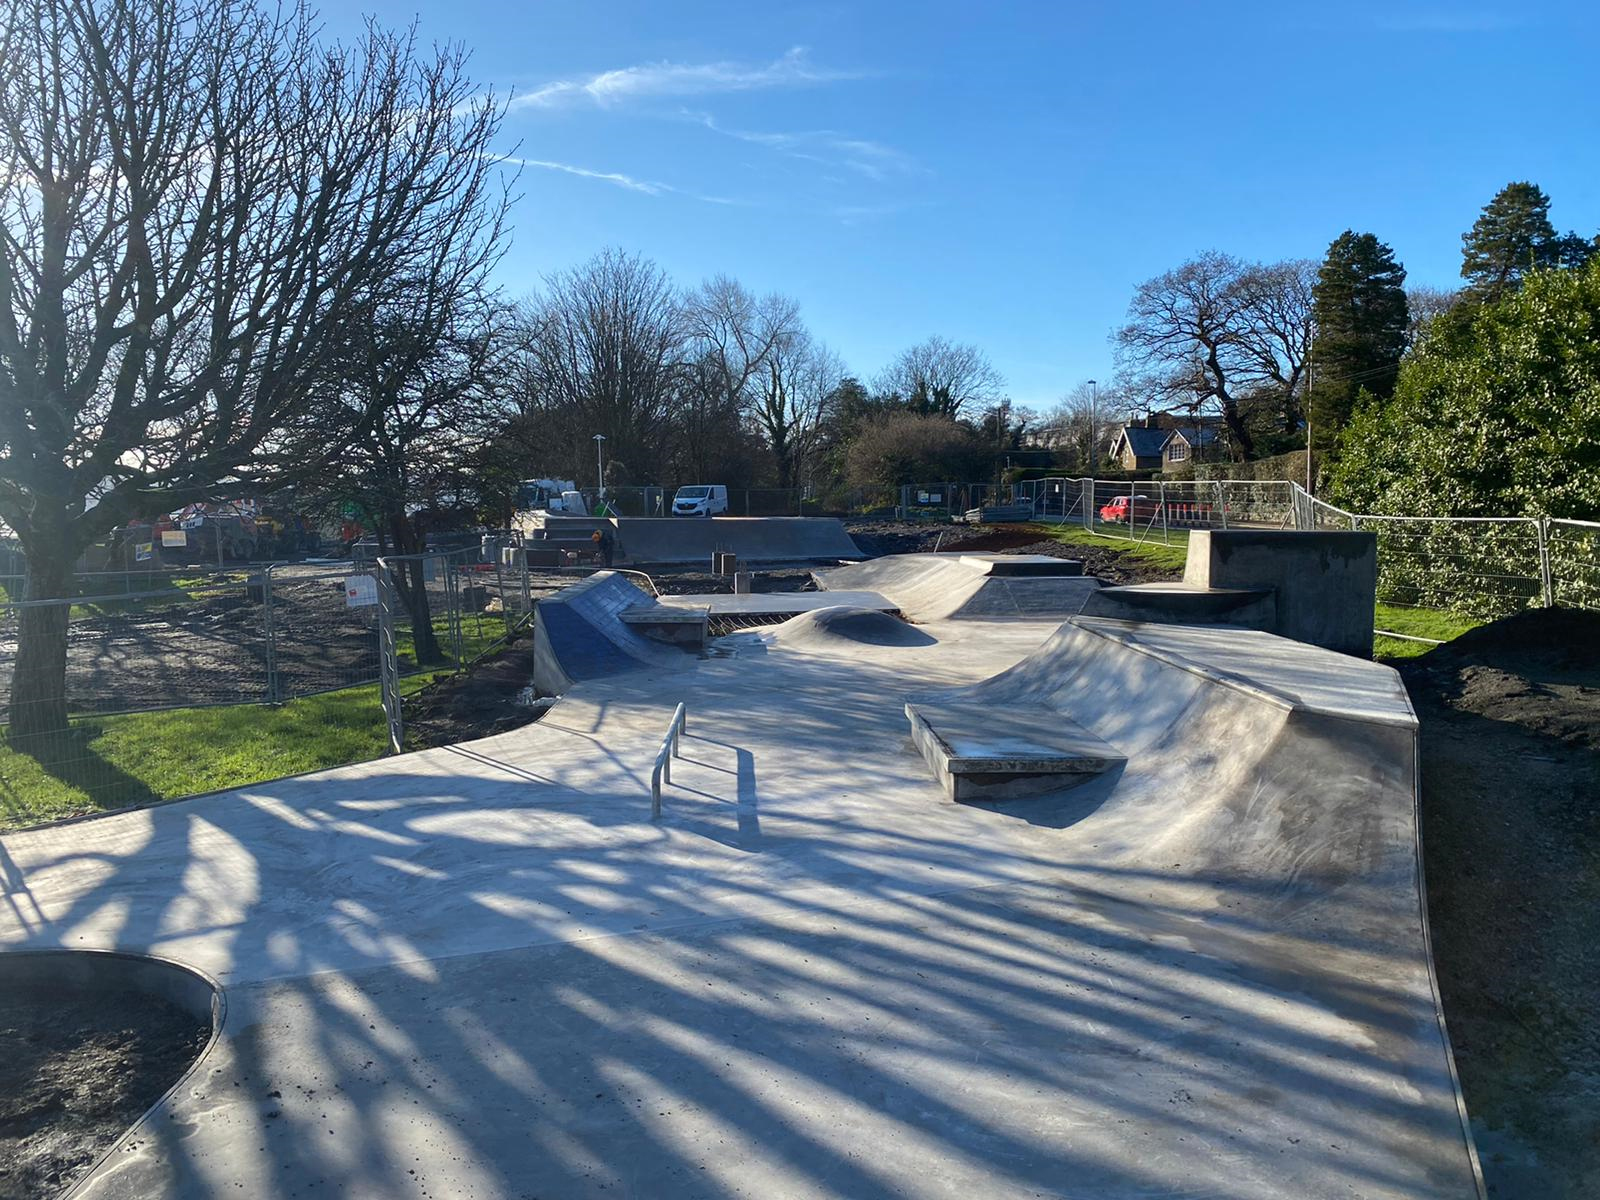 Skatepark near completion...